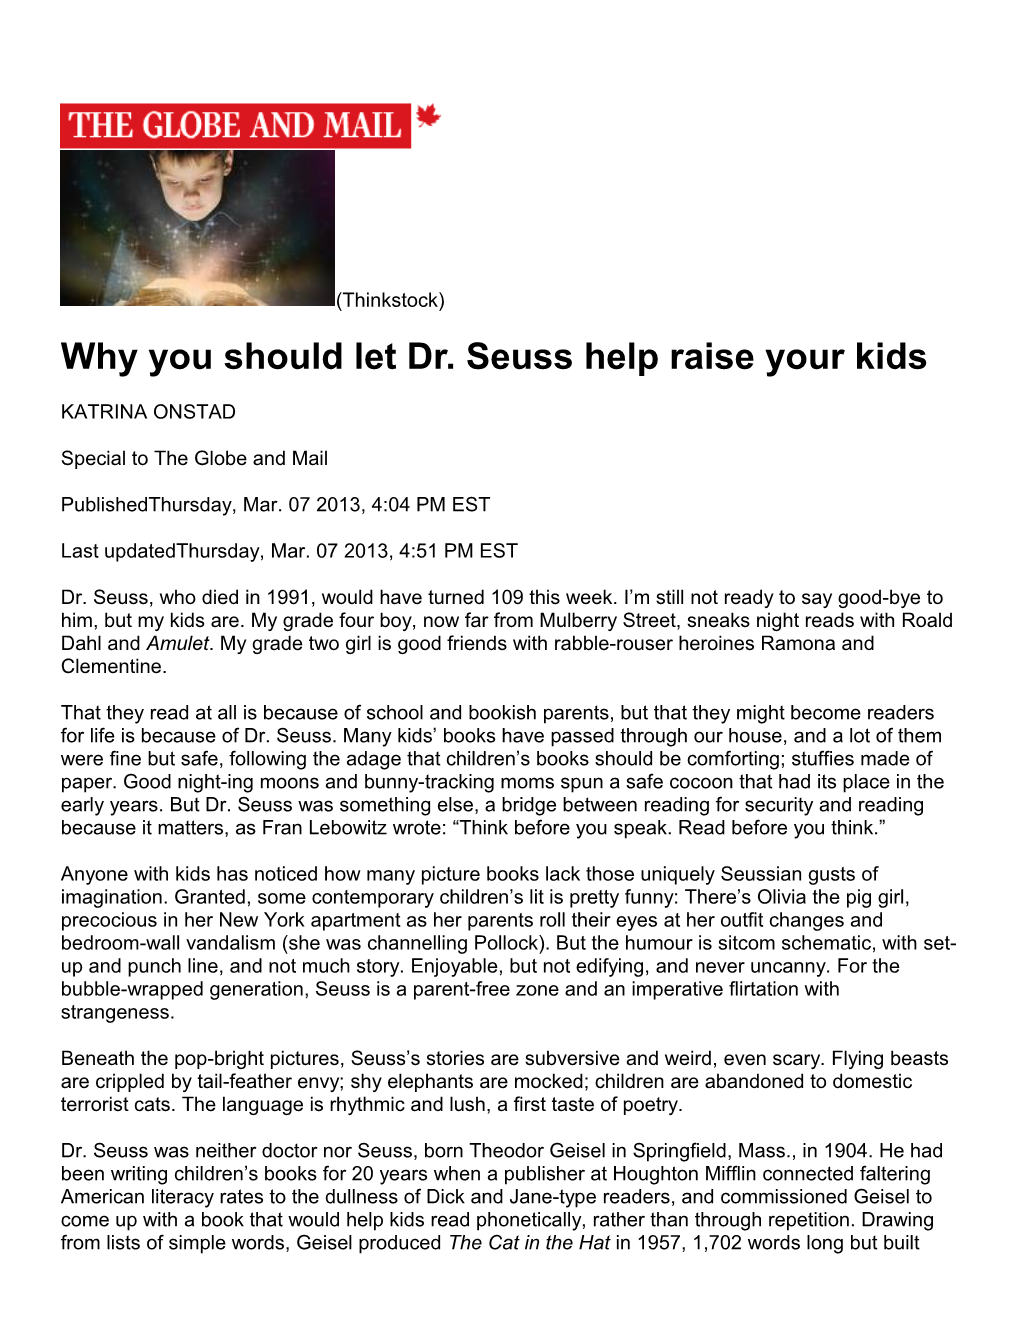 Why You Should Let Dr. Seuss Help Raise Your Kids